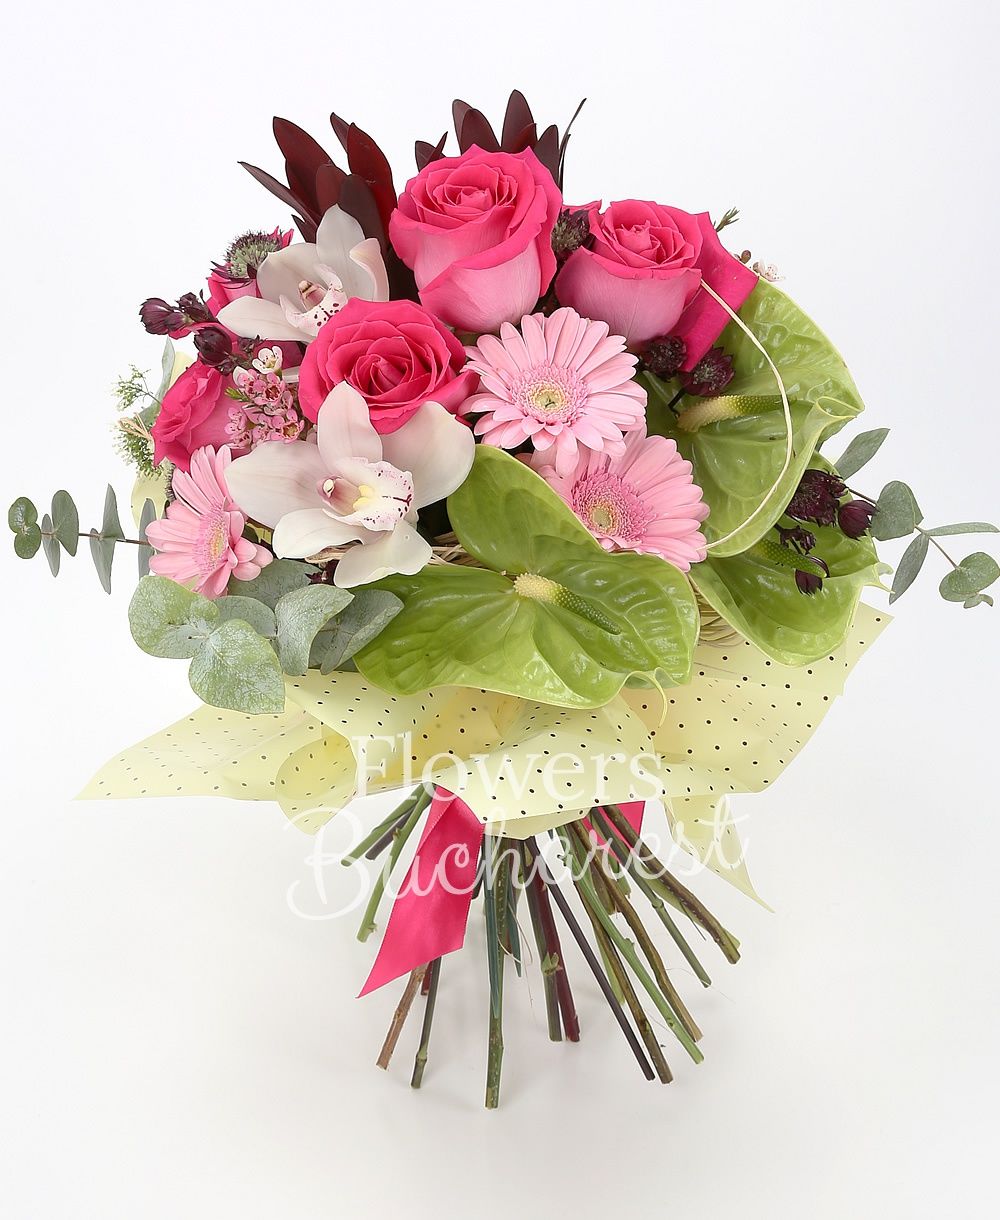 5 cyclam roses, 3 pink gerbera, 3 green anthurium, 2 leucadendron, 2 white trachelium, white cymbidium, pink waxflower, greenery